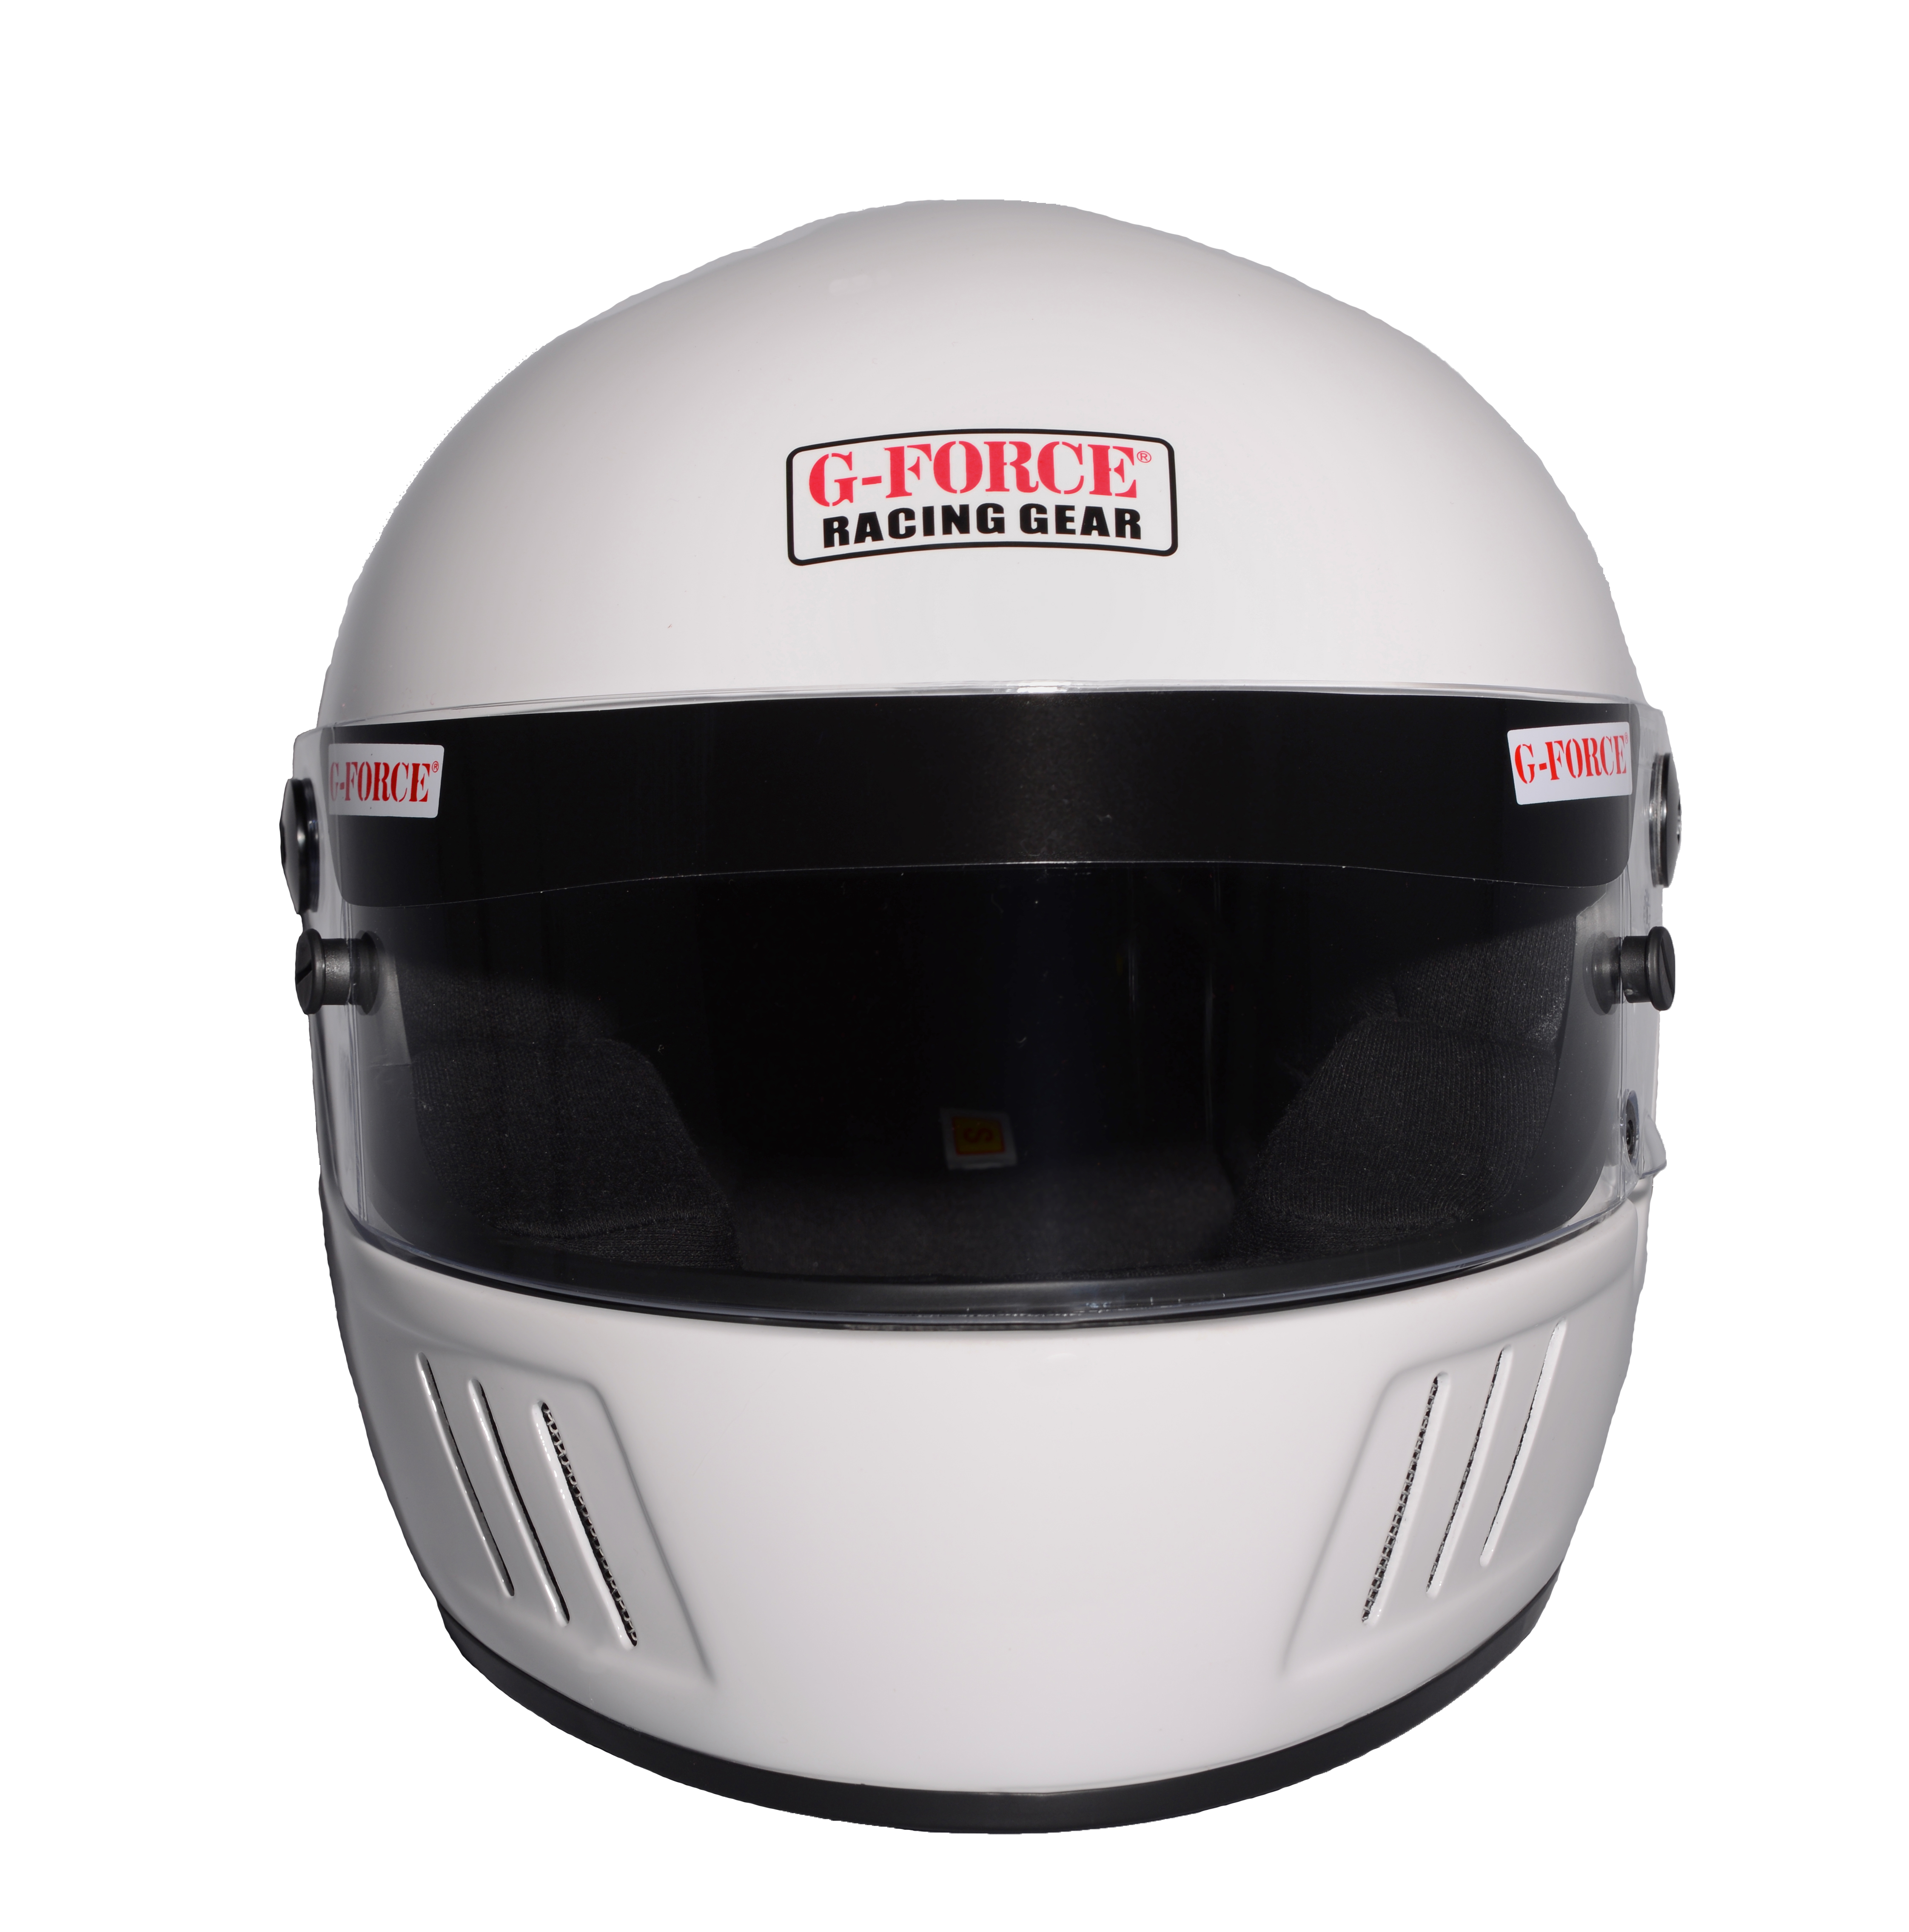 G-Force Racing Gear Helmet, PRO ELIMINATOR SA2010 FULL FACE MEDIUM WHITE